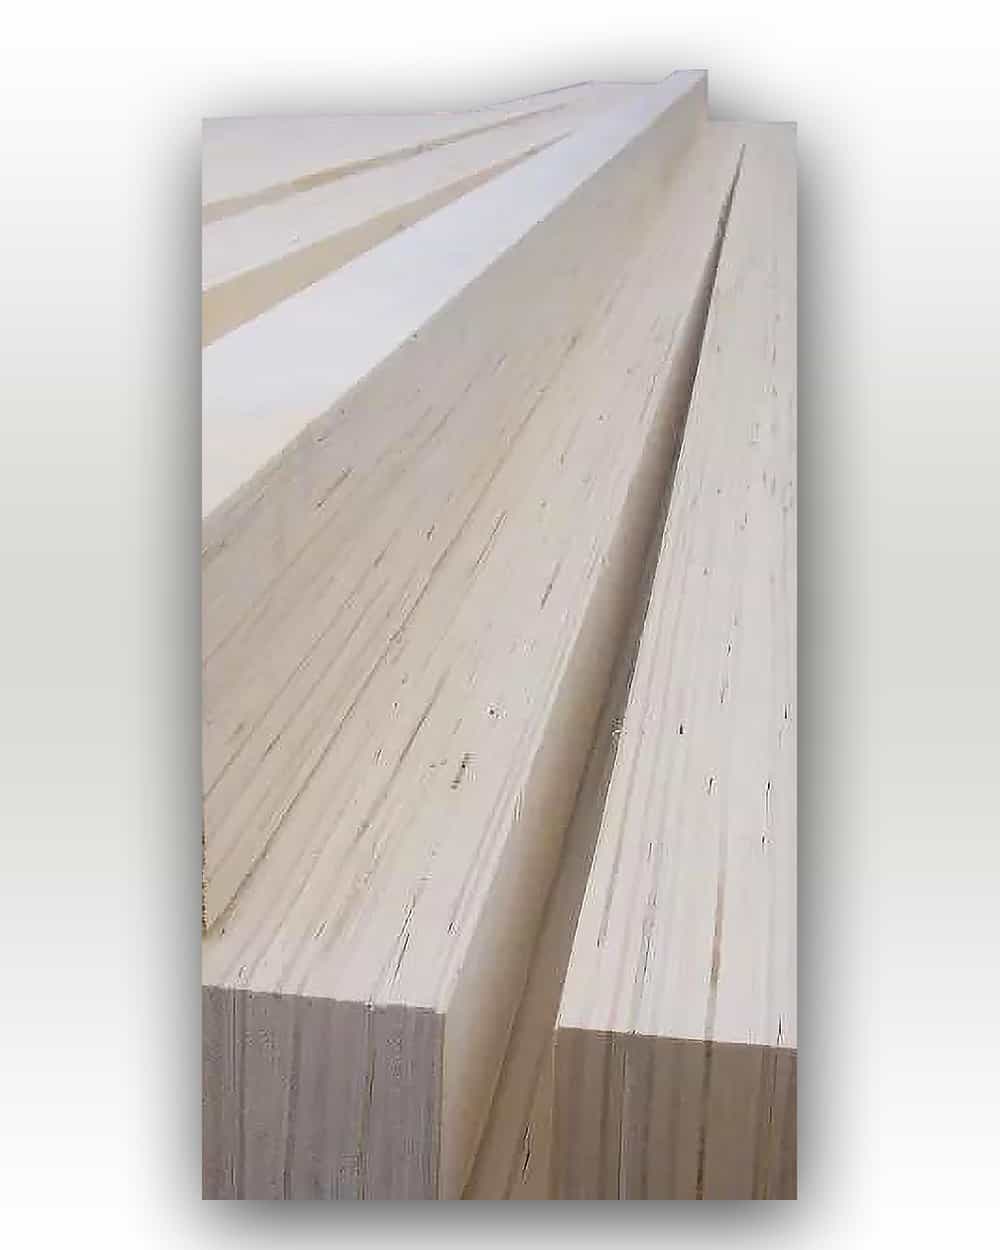 LVL (Laminated Veneer Lumber) - Born-mold